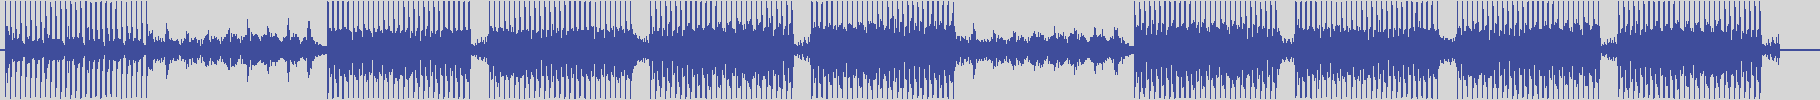 nf_boyz_records [NFY062] Wandy Harroll - One Enjoy [Modern Mix] audio wave form